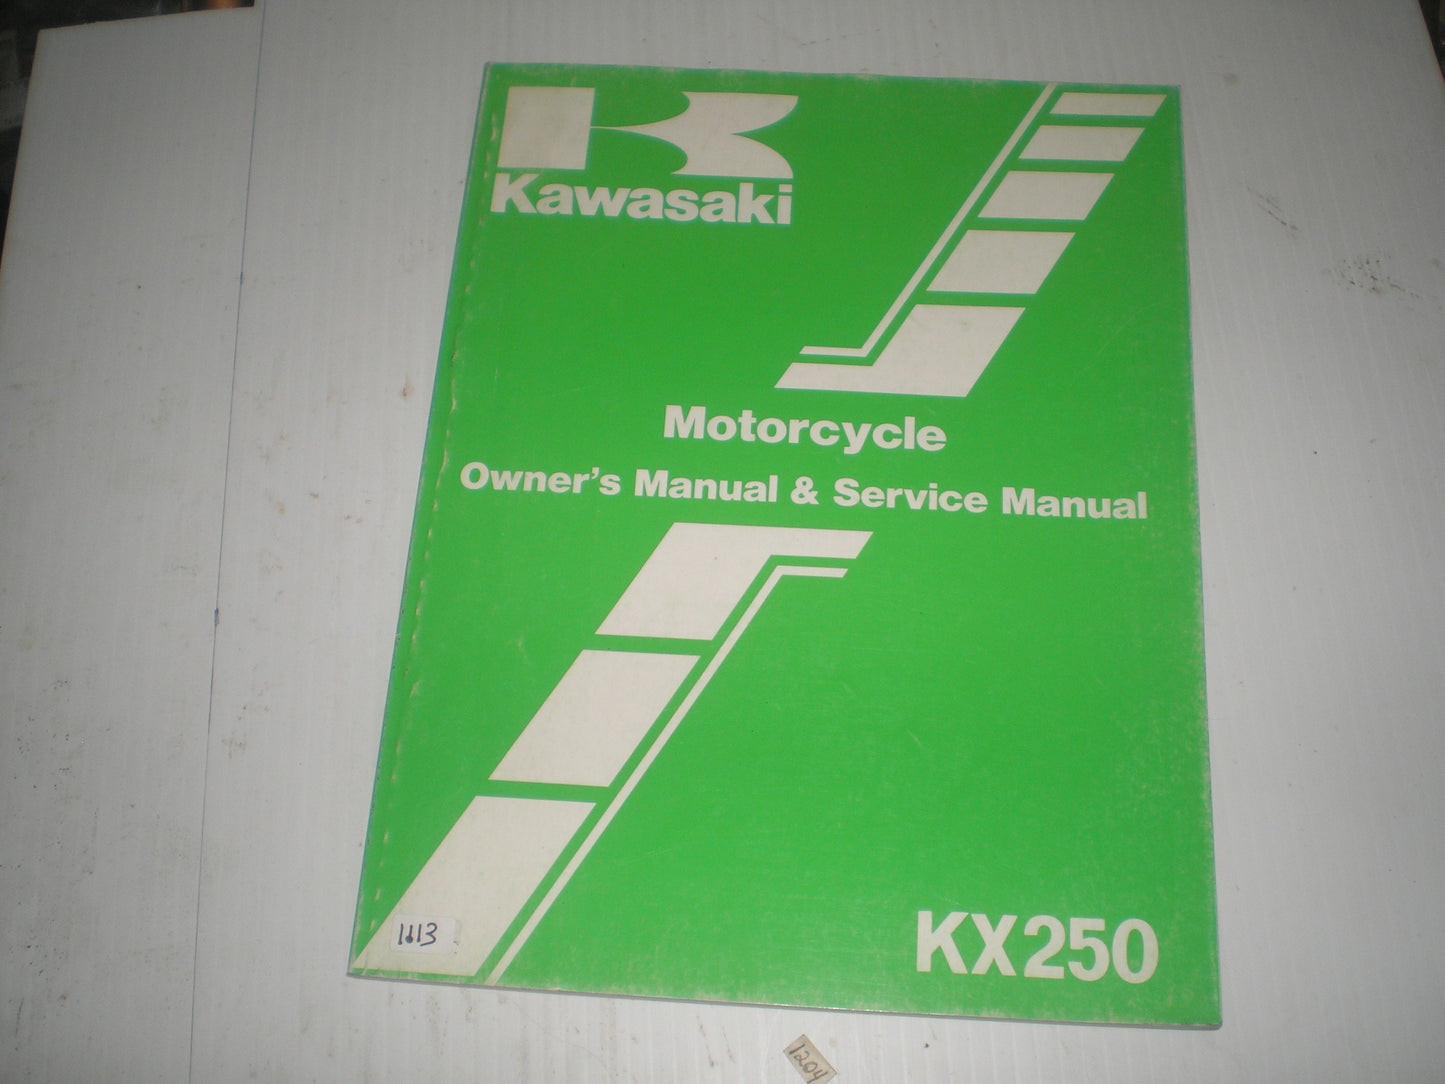 KAWASAKI KX250 D2  1986  Owner's & Service Manual  99920-1322-01  #1113